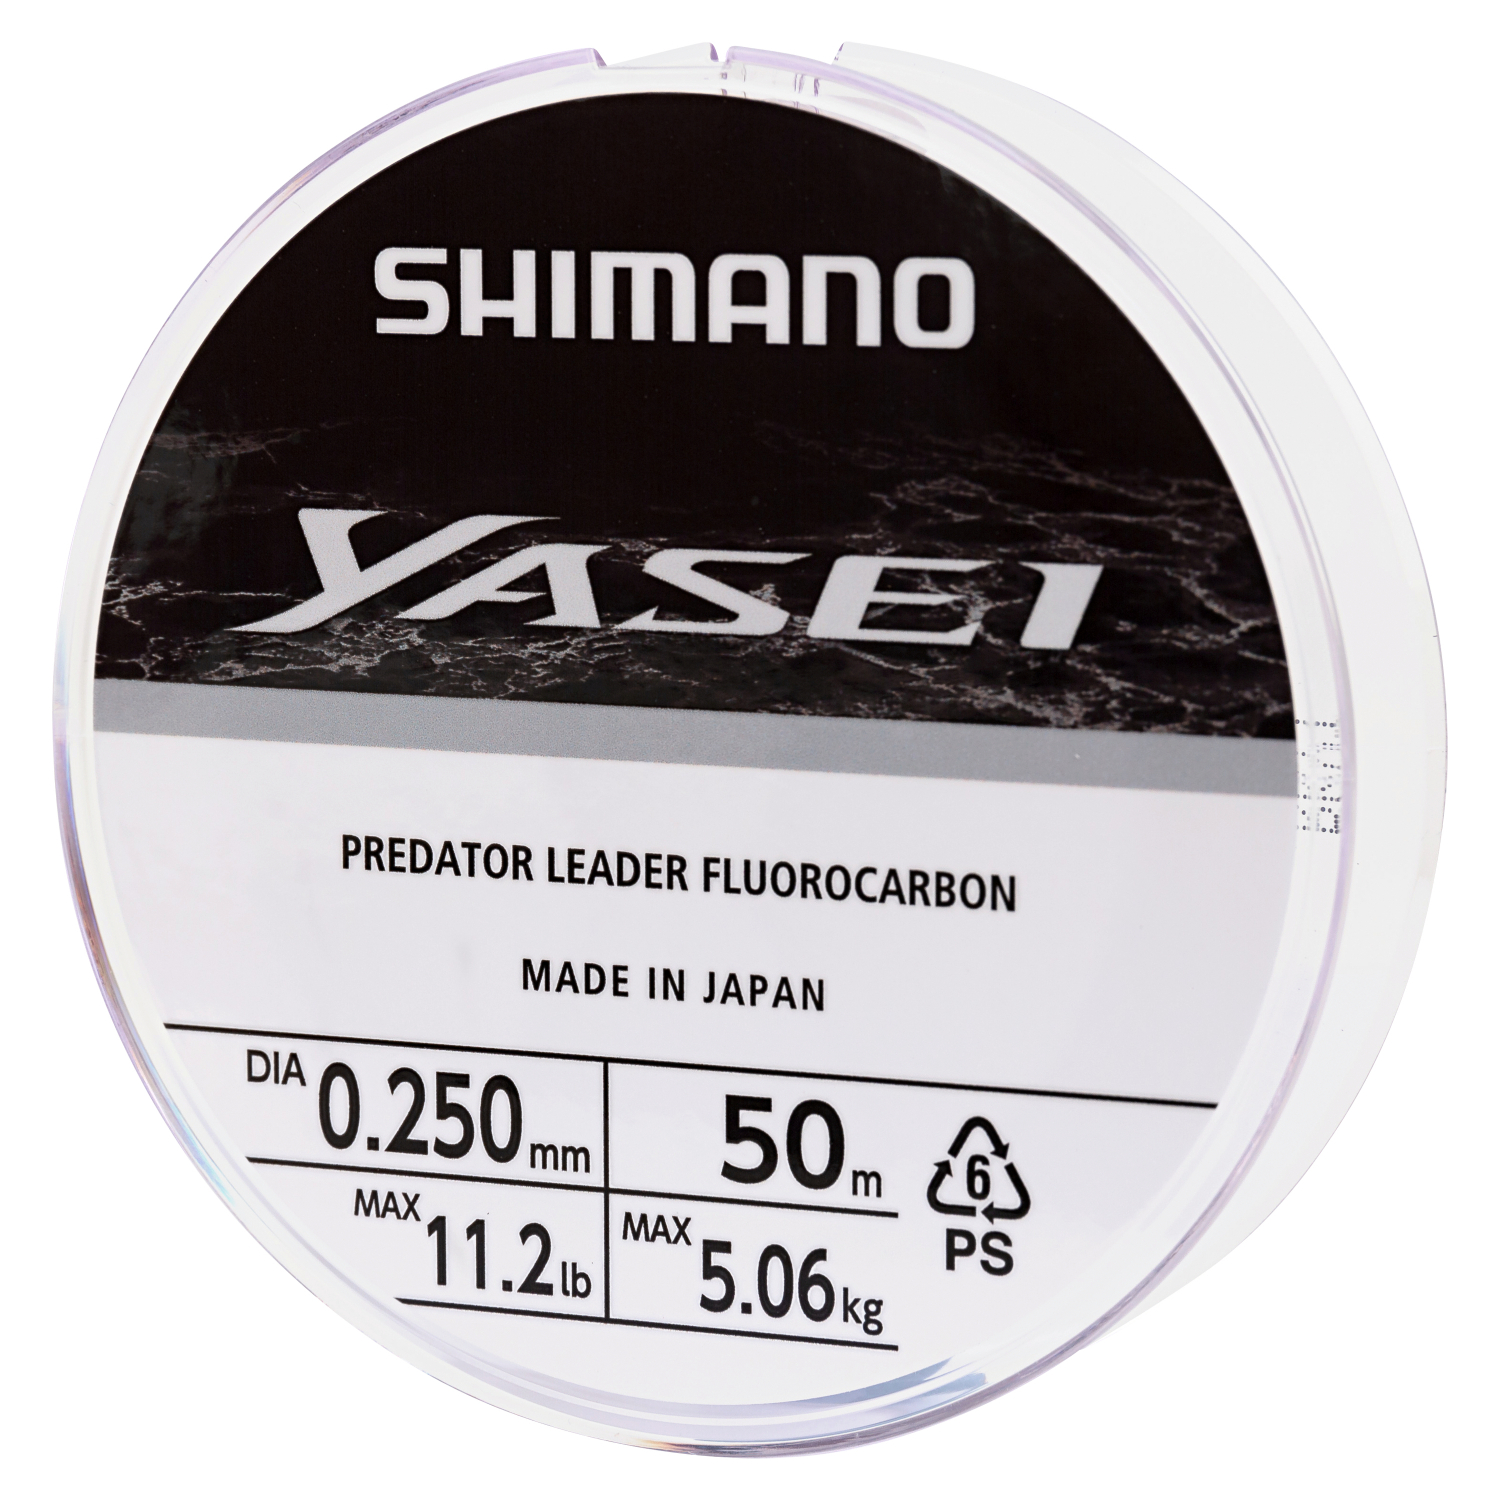 Shimano Yasei Predator Fluorocarbon fishing line (transparent, 50